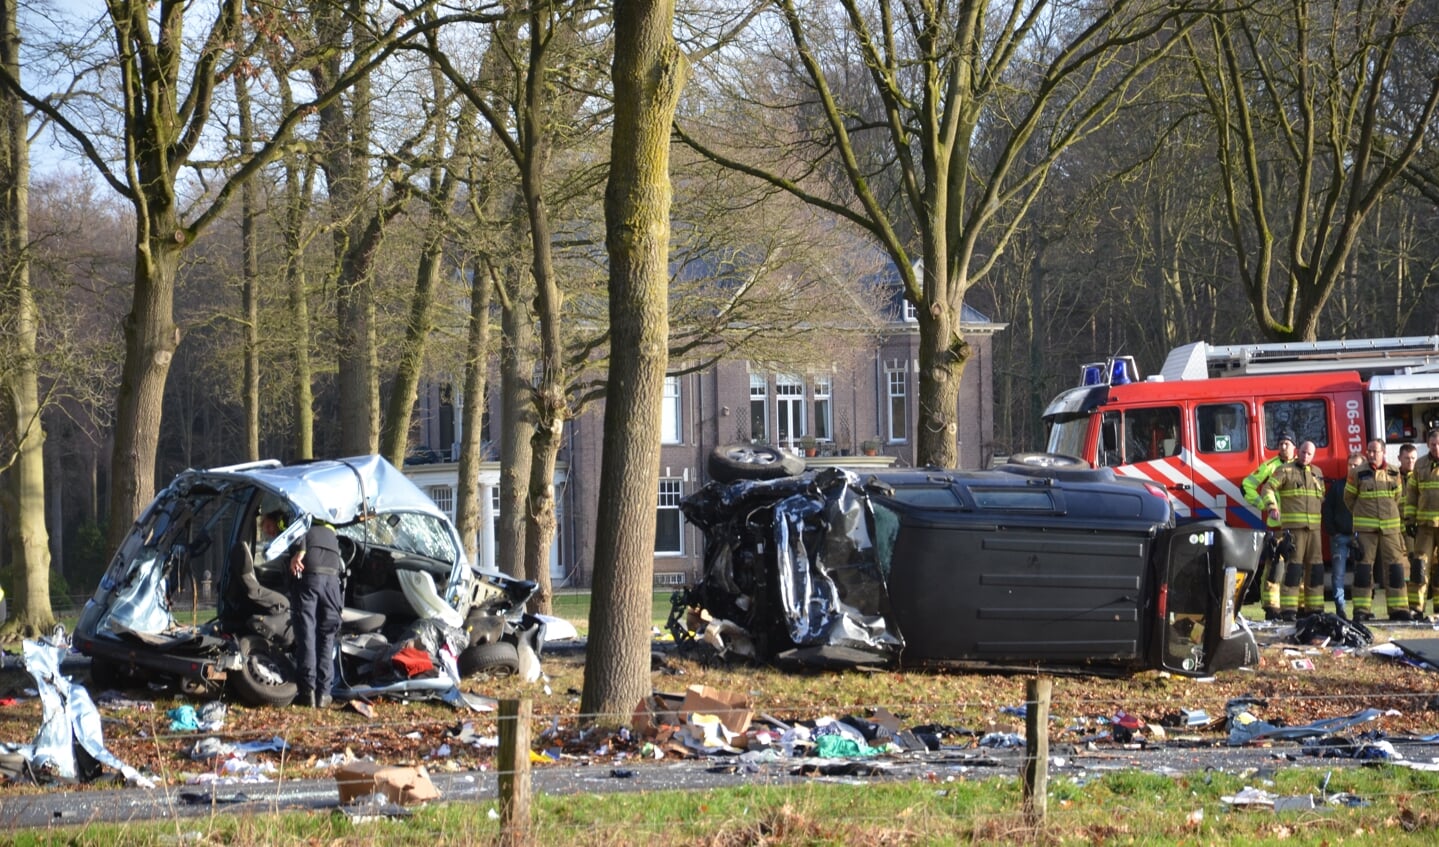 Ernstig ongeval op N346 bij Warnsveld. Foto: GinoPress B.V.